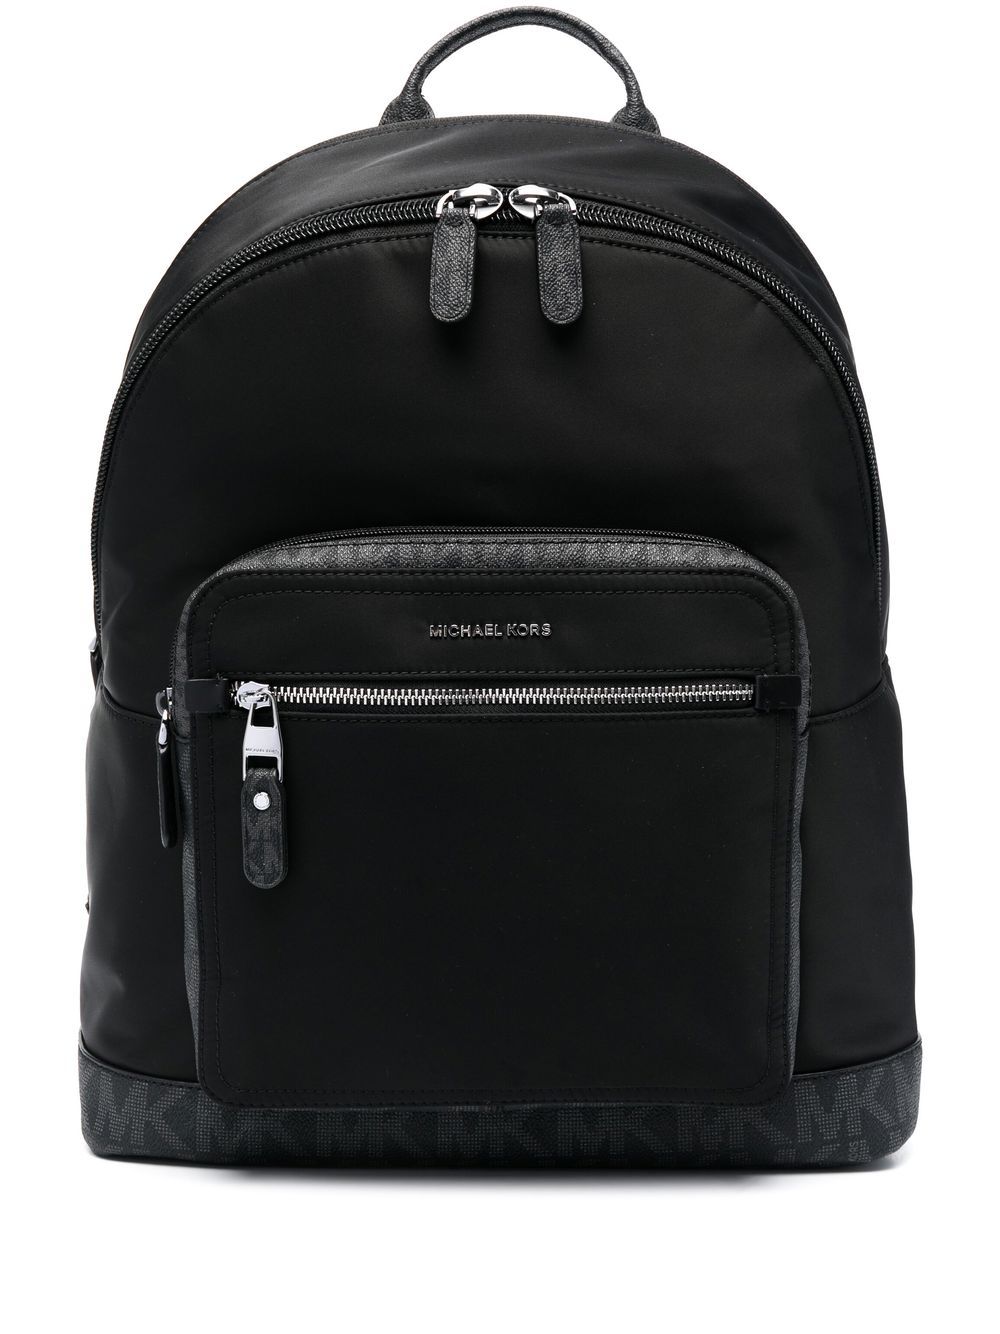 Michael Kors Hudson Logo Backpack - ShopStyle